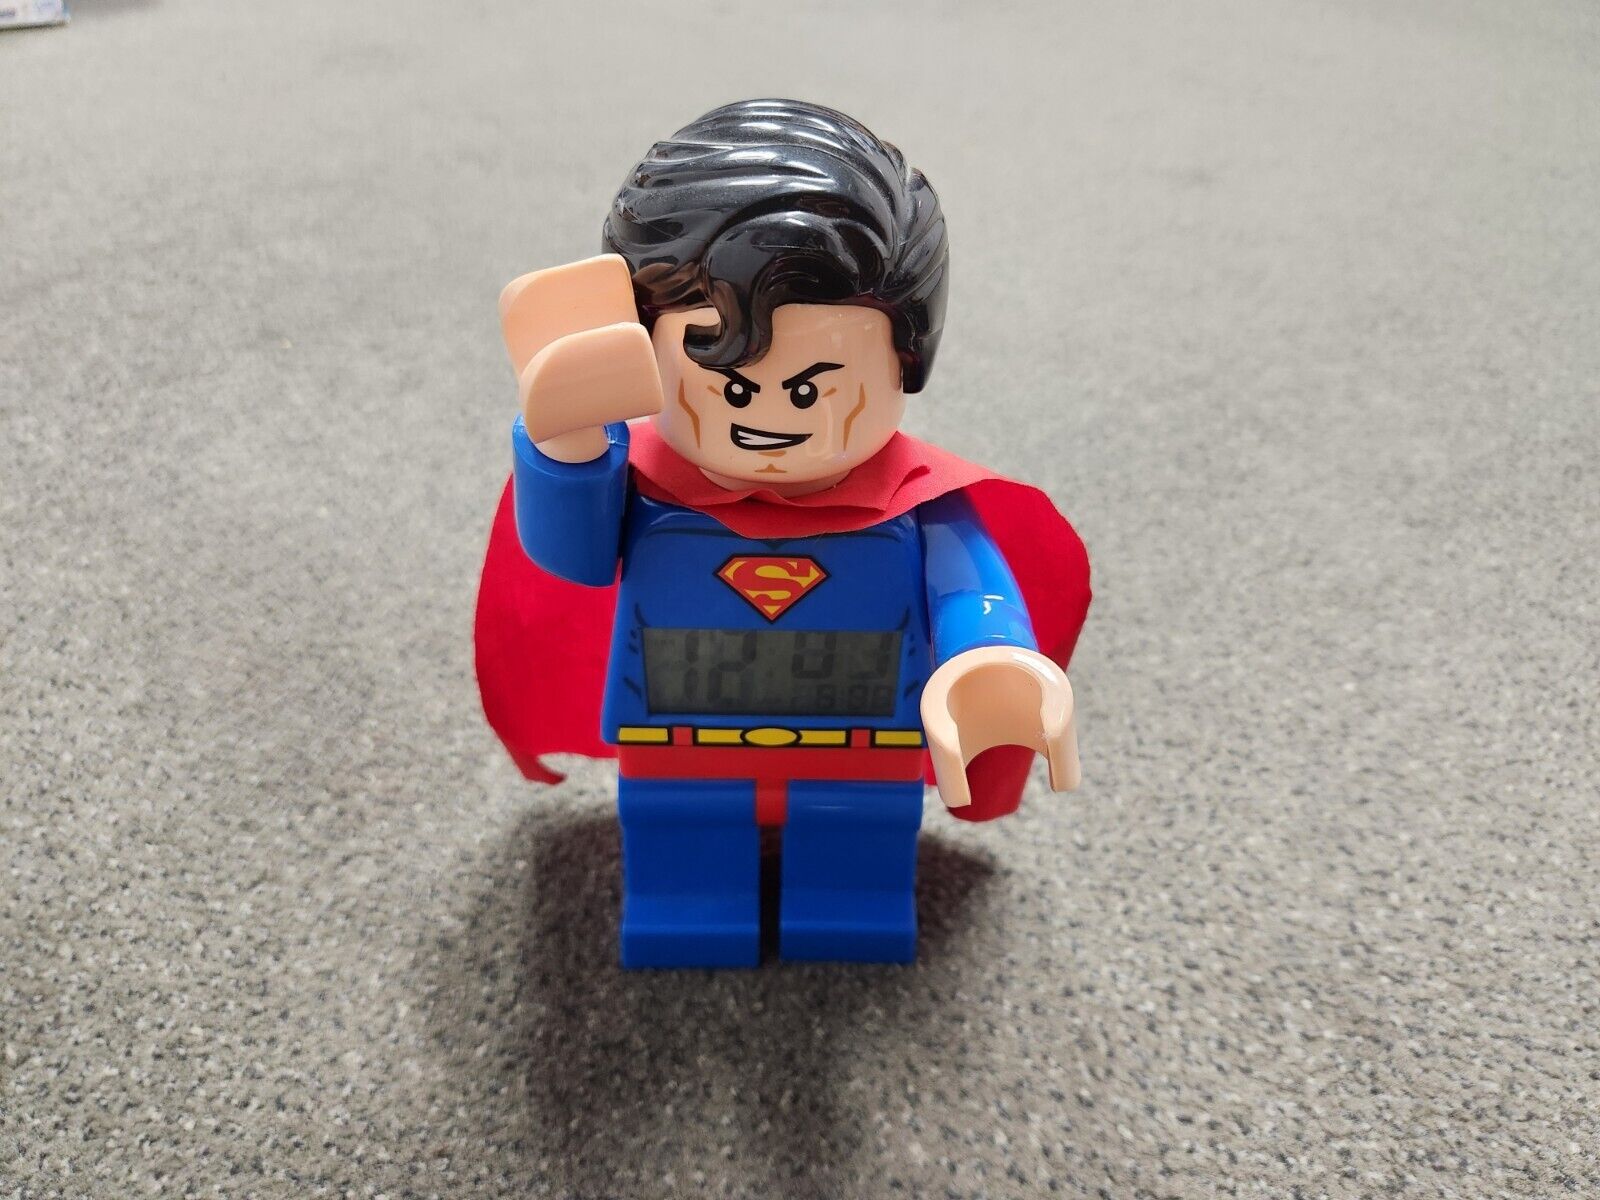 Lego Superman Digital Alarm Clock DC Comics Super Heroes Minifigure Tested Works